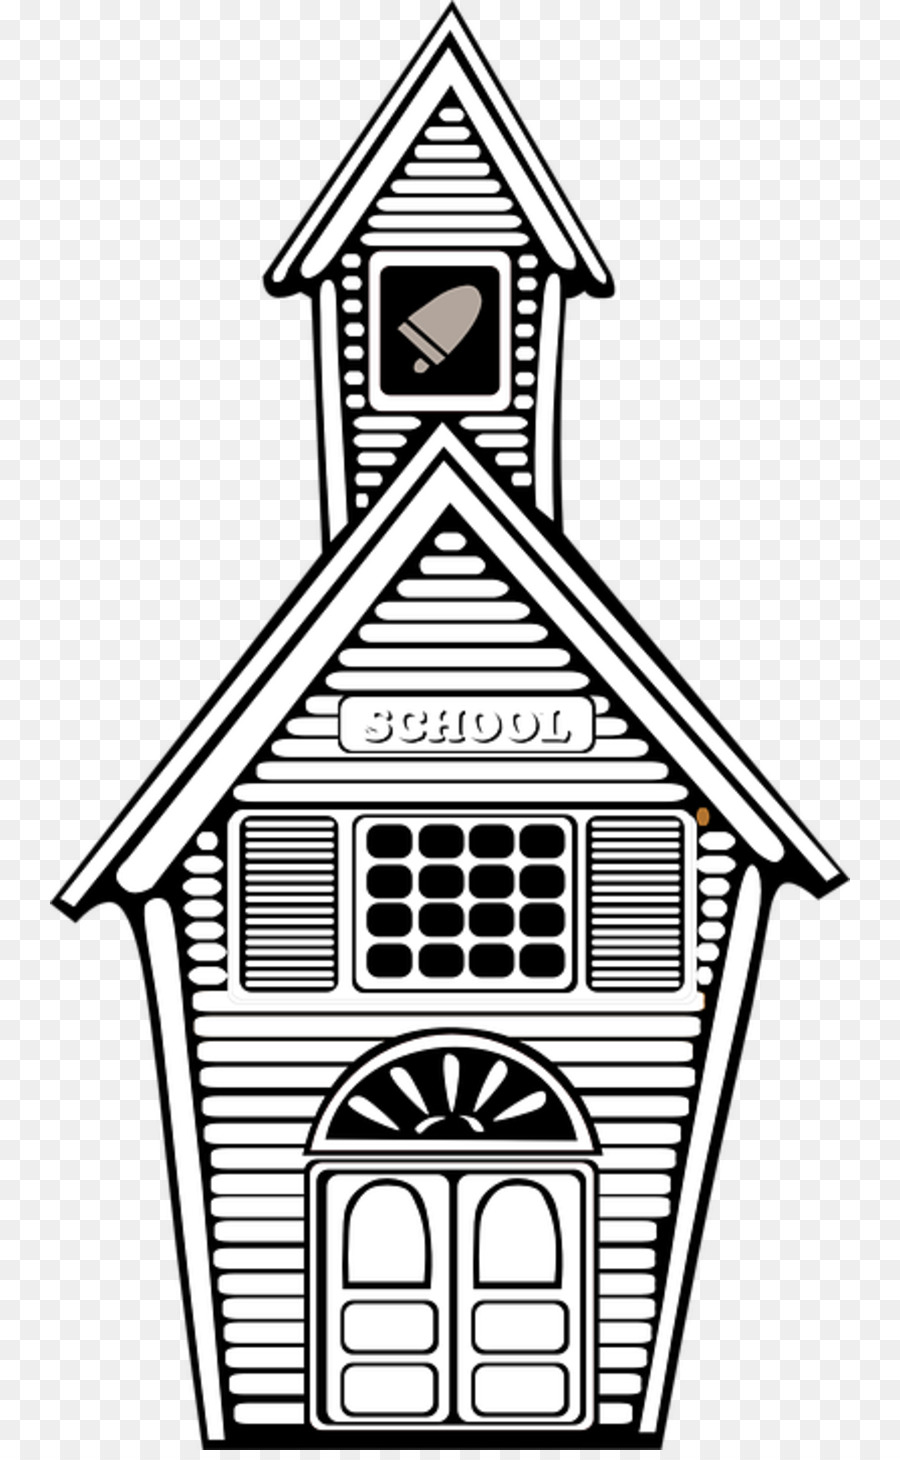 House School Line art Clip art - school buildings png download - 800*1450 - Free Transparent House png Download.